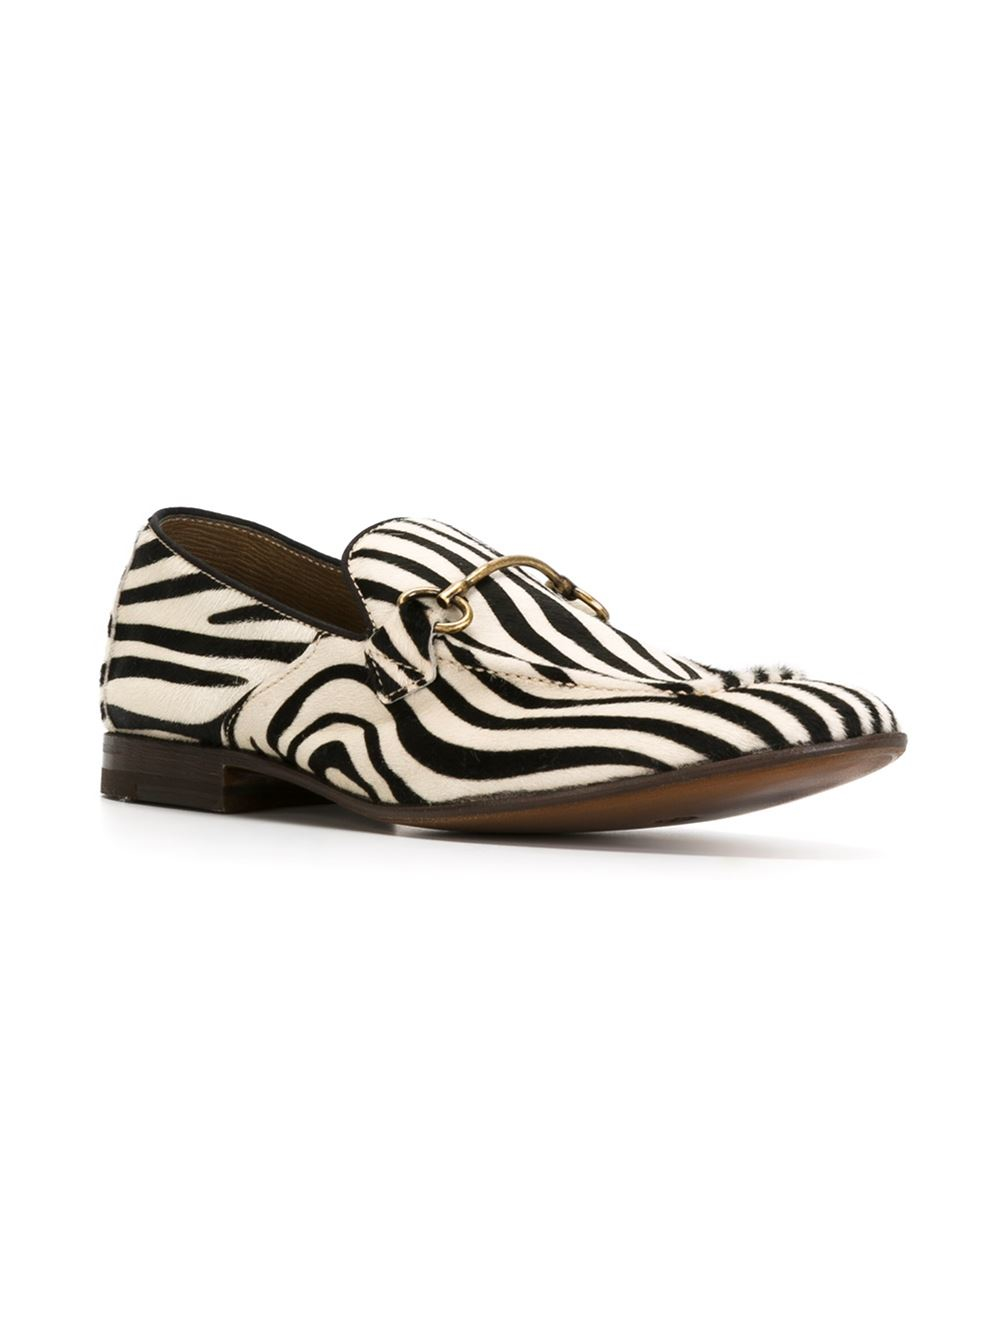 Henderson Fur Zebra Print Loafers in Black for Men - Lyst